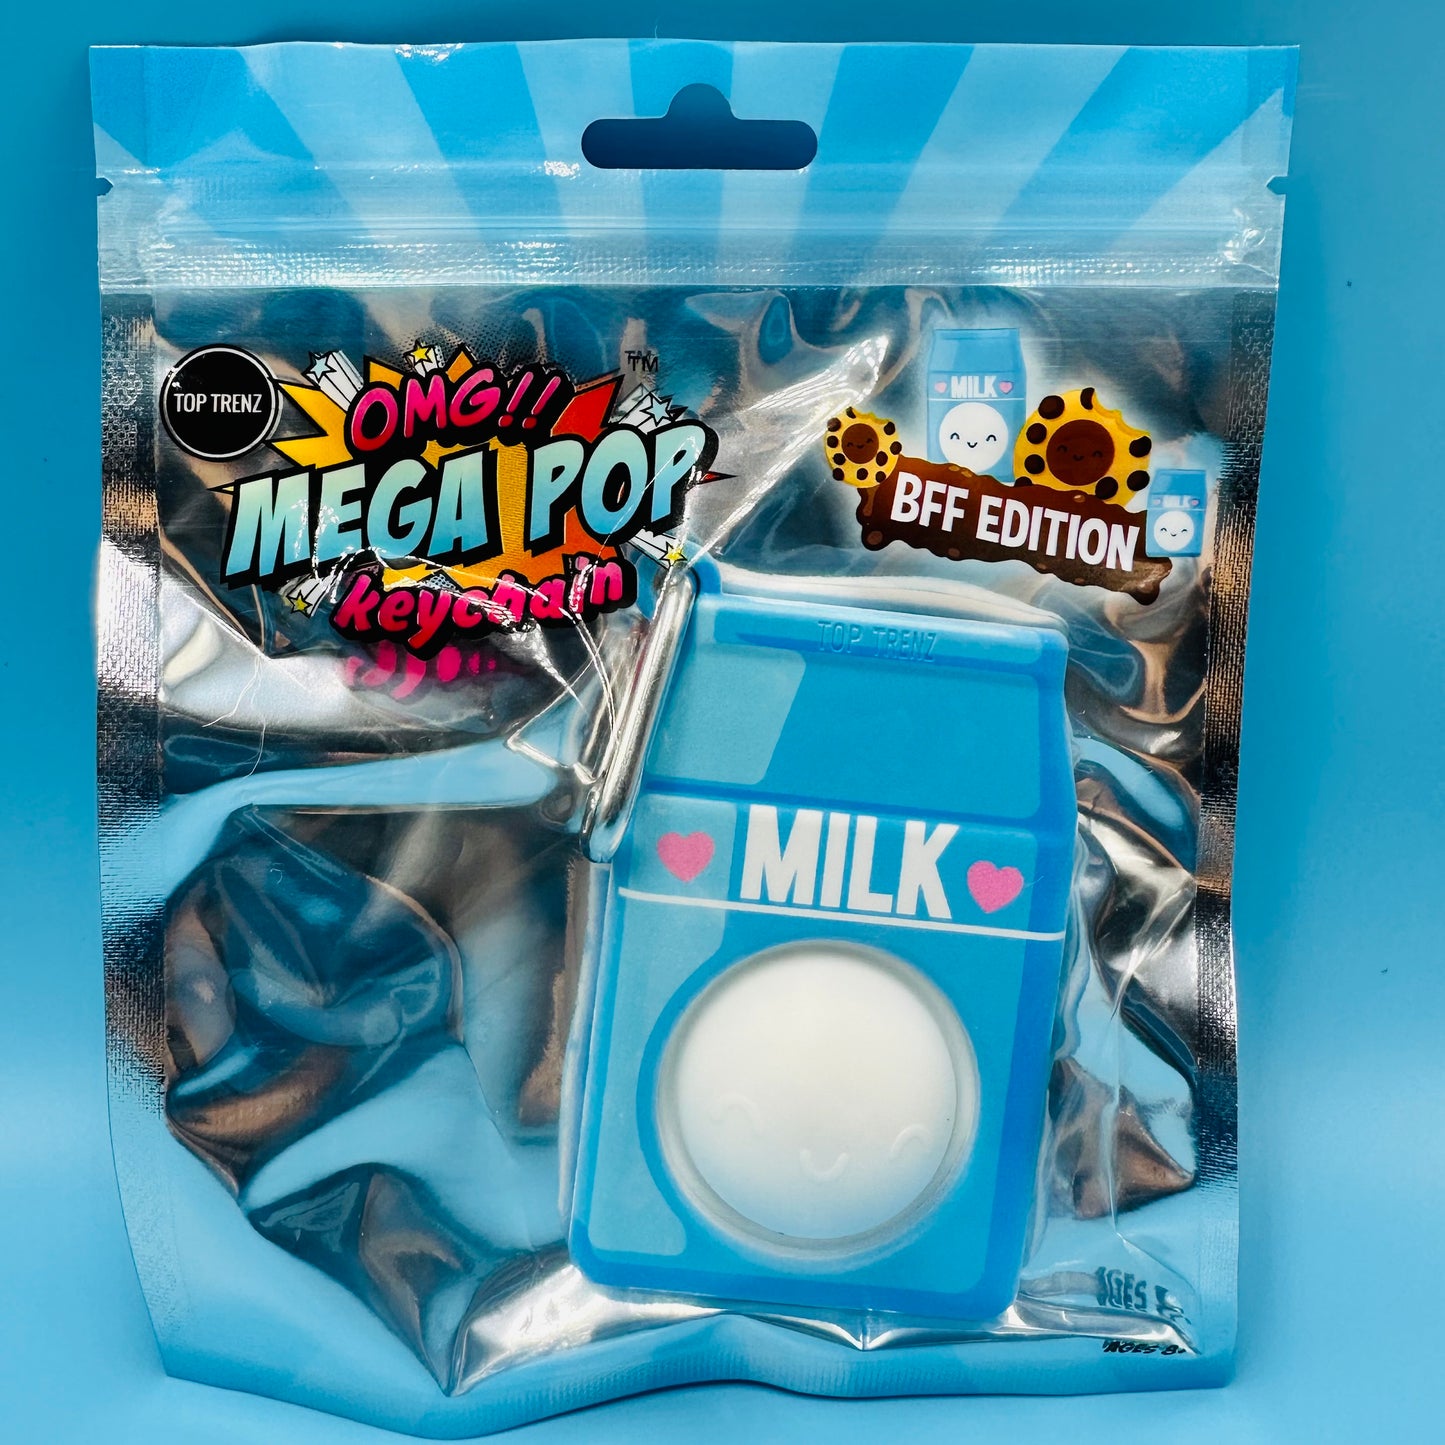 OMG Mega Pop Best Friend Keychains - Milk & Cookies